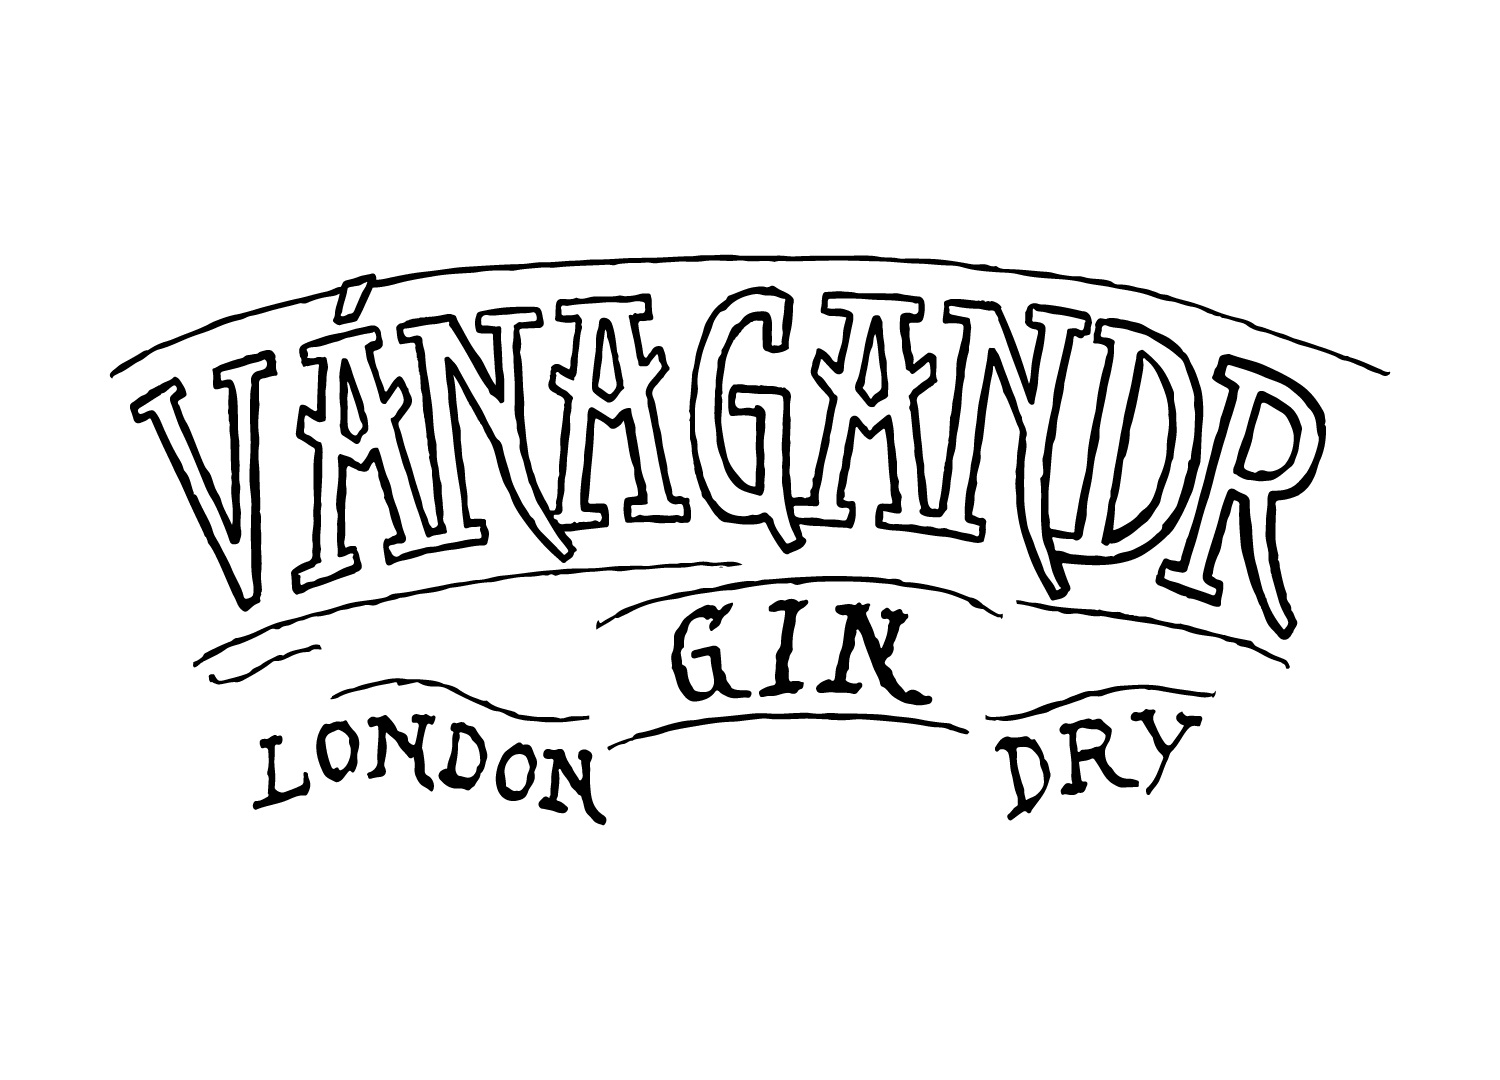 Vanagandr London Dry Gin